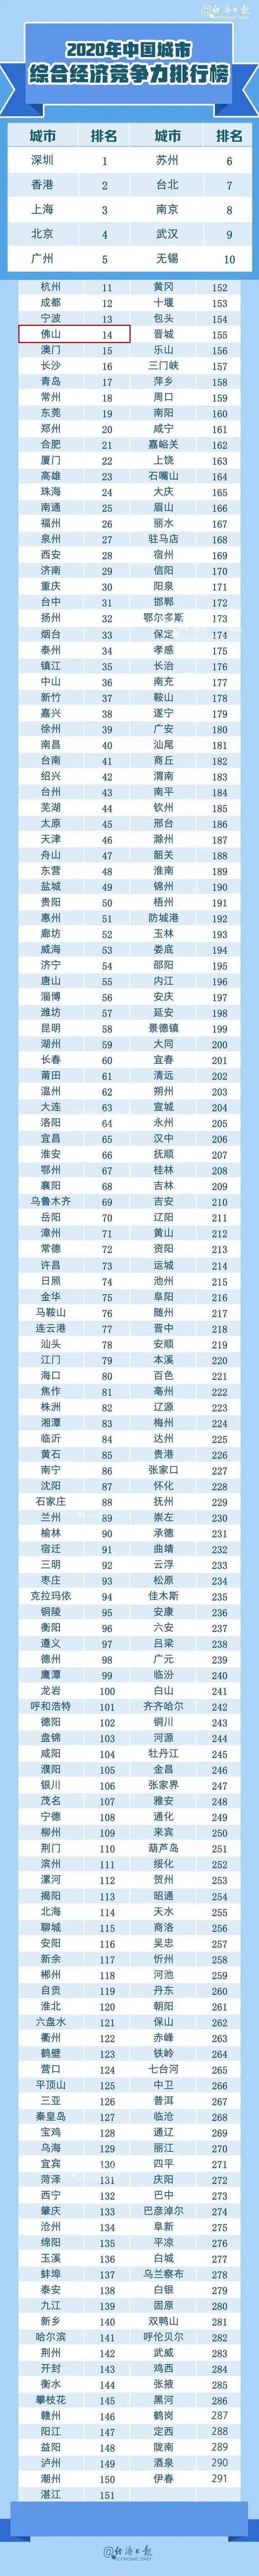 jbo竞博官网|
2020年中国都会竞争力陈诉宣布 佛山的排名是……(图2)